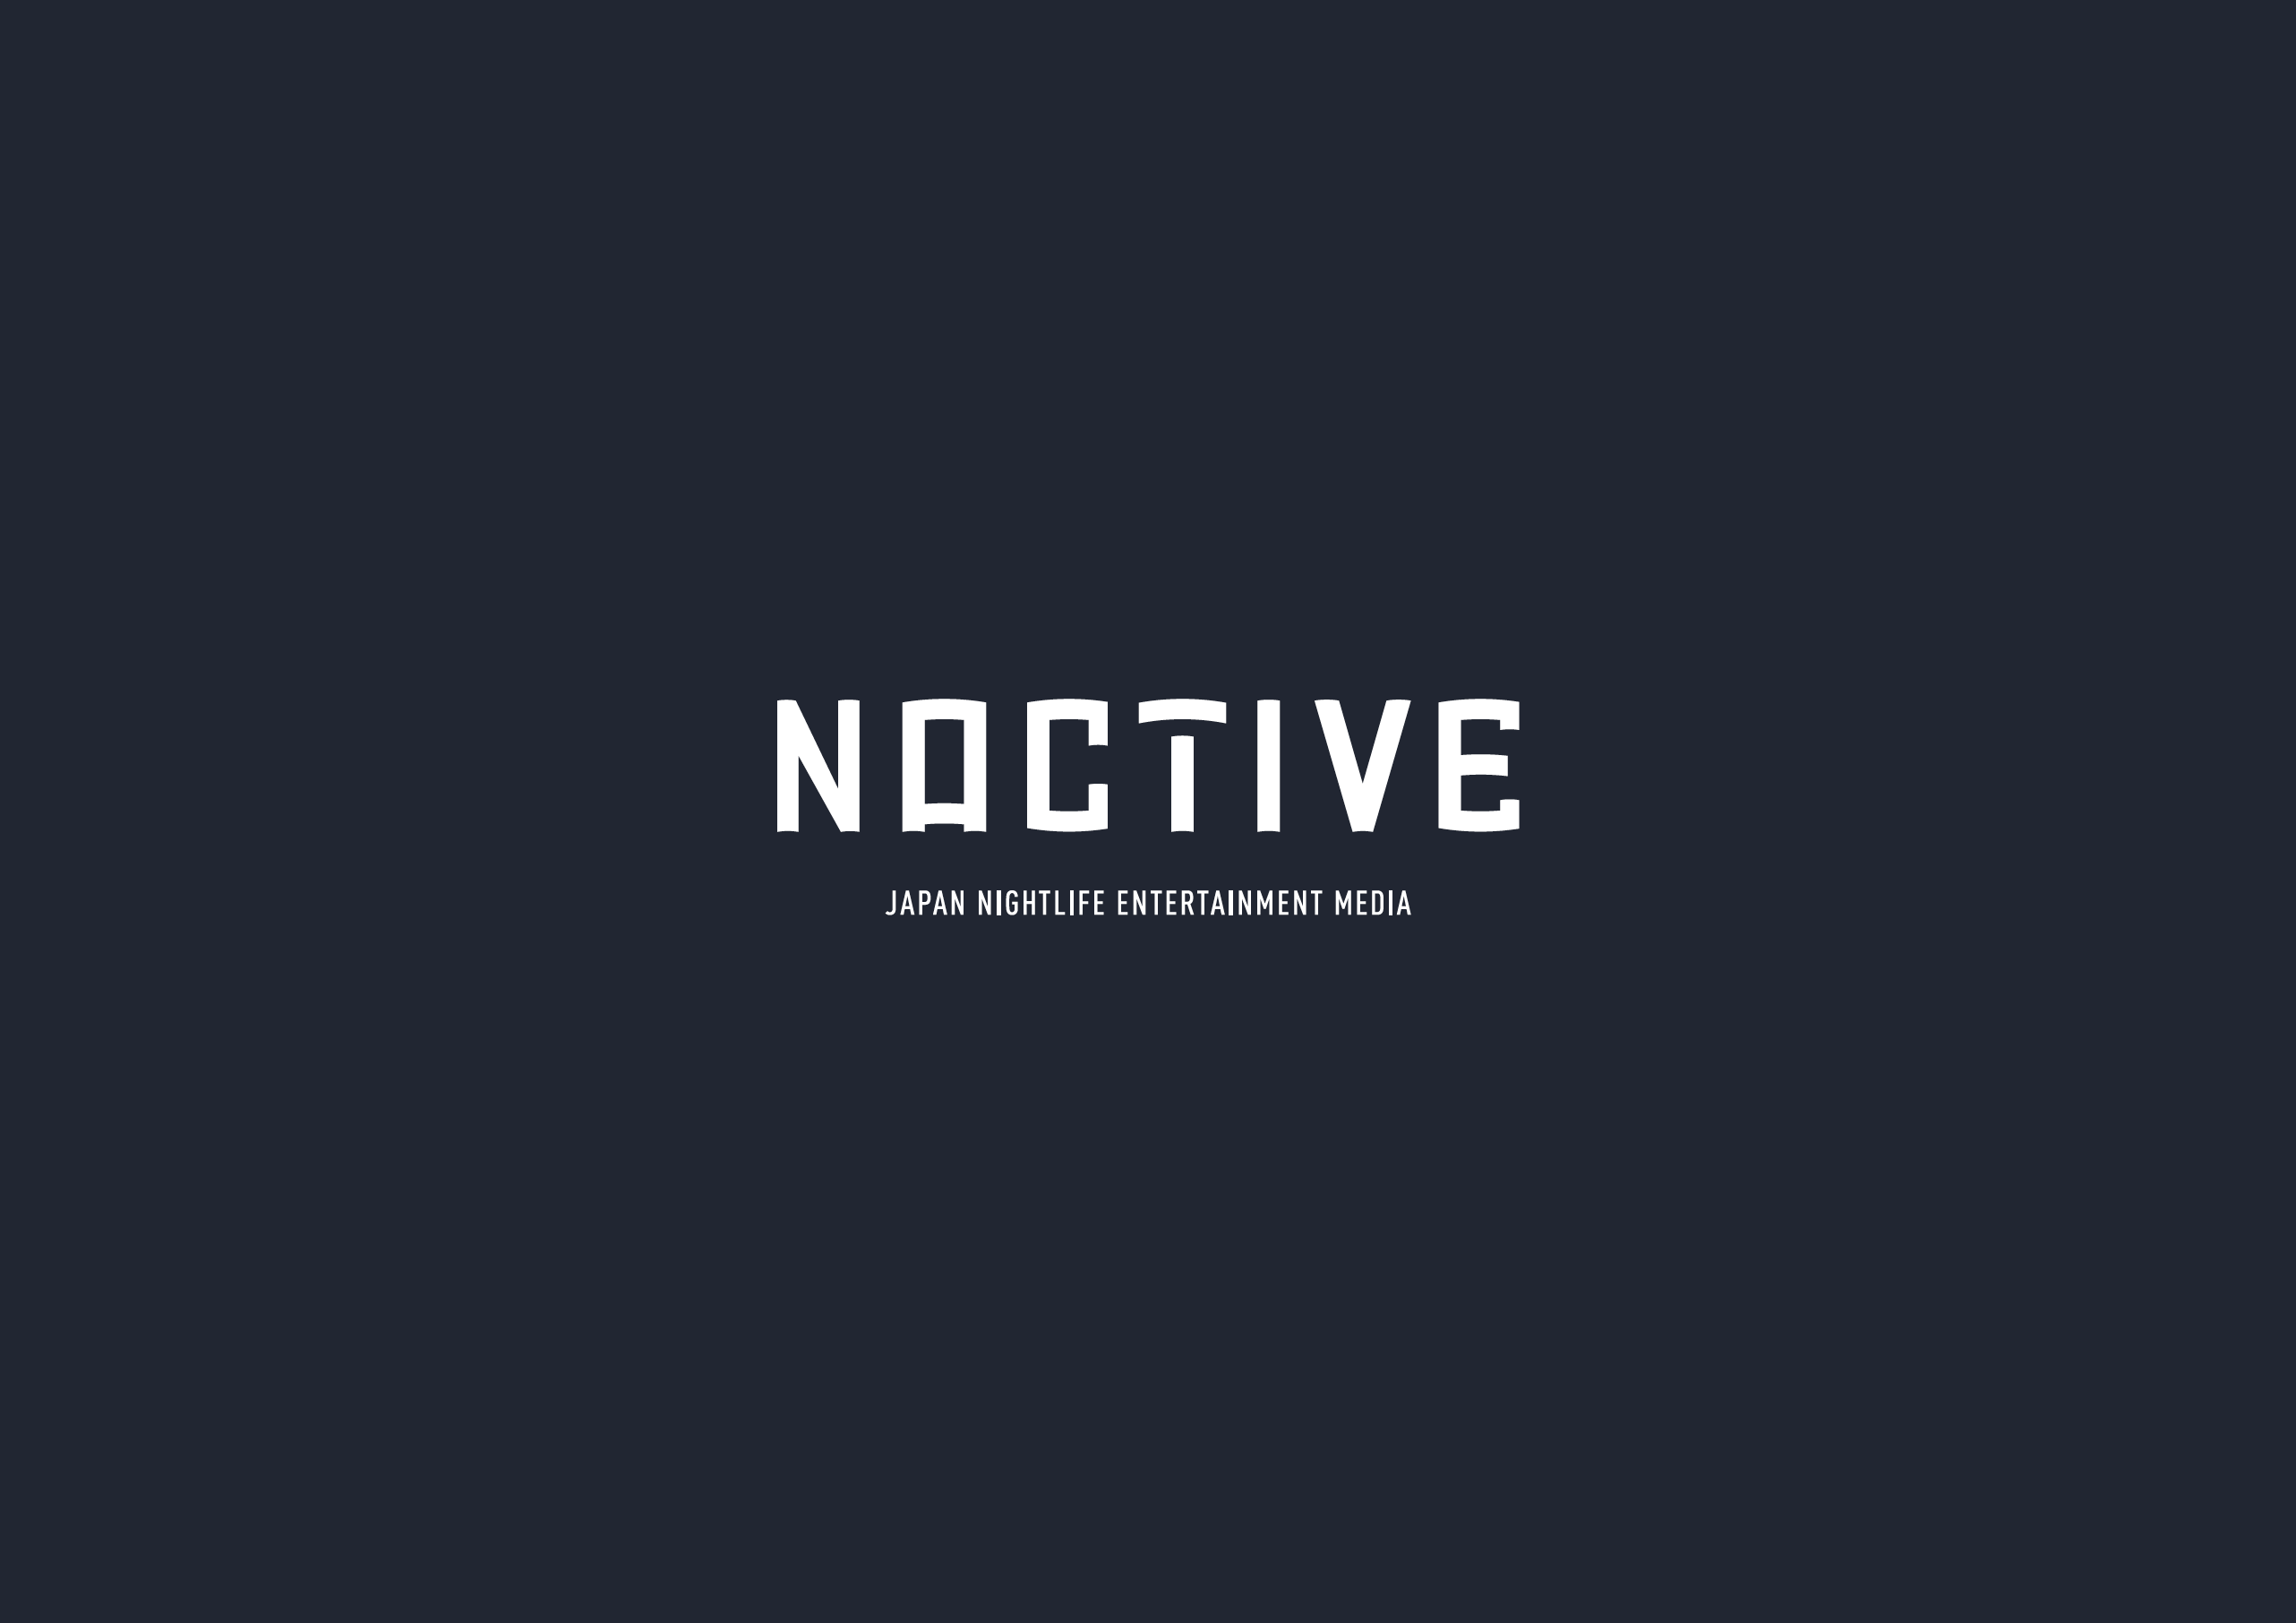 http://corporate.navitime.co.jp/topics/noctive_logo.png